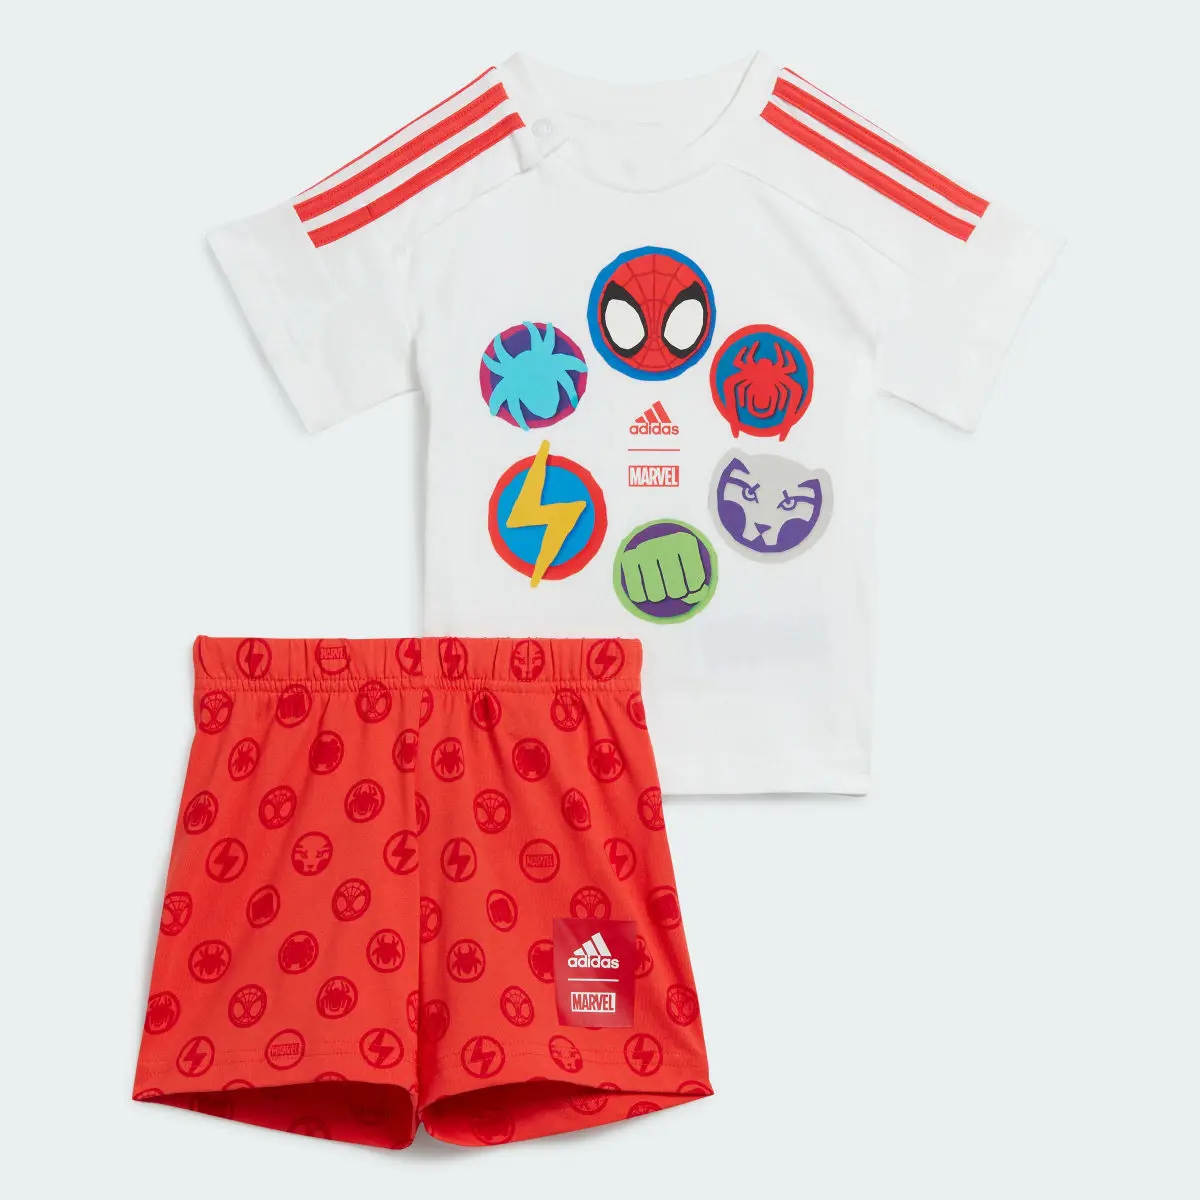 Adidas x Marvel Spider-Man Tee and Shorts Set. 2